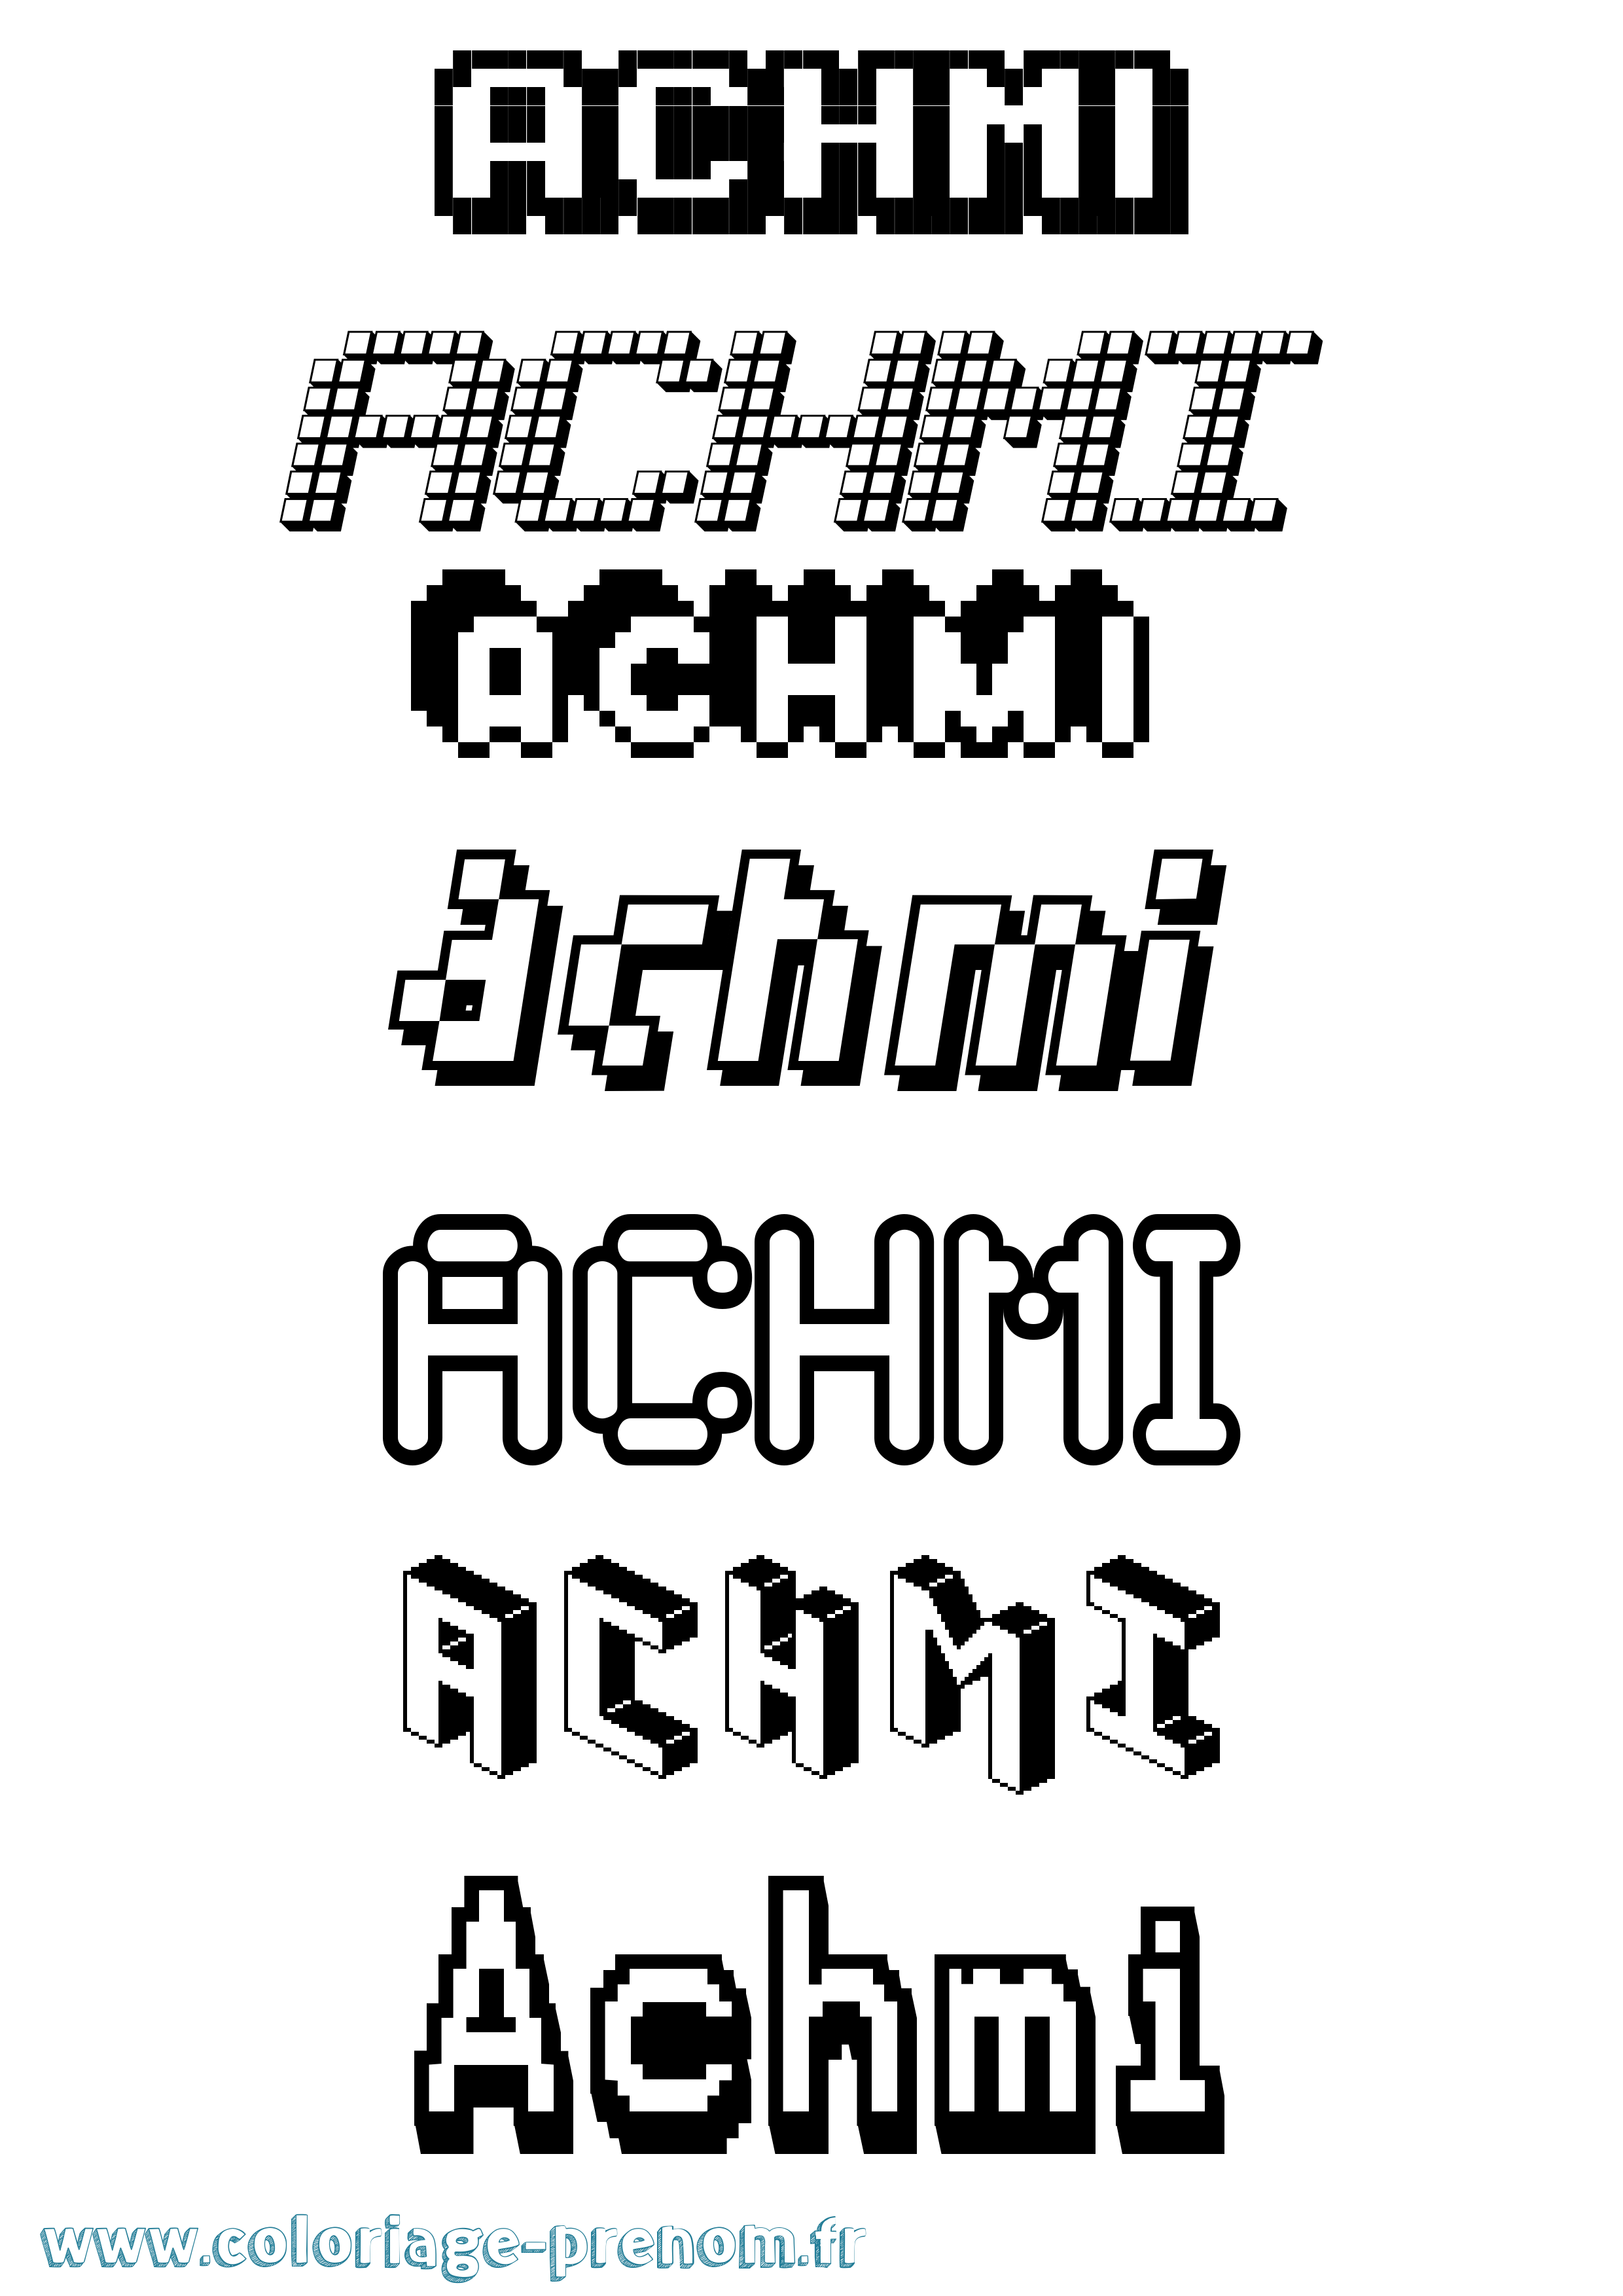 Coloriage prénom Achmi Pixel